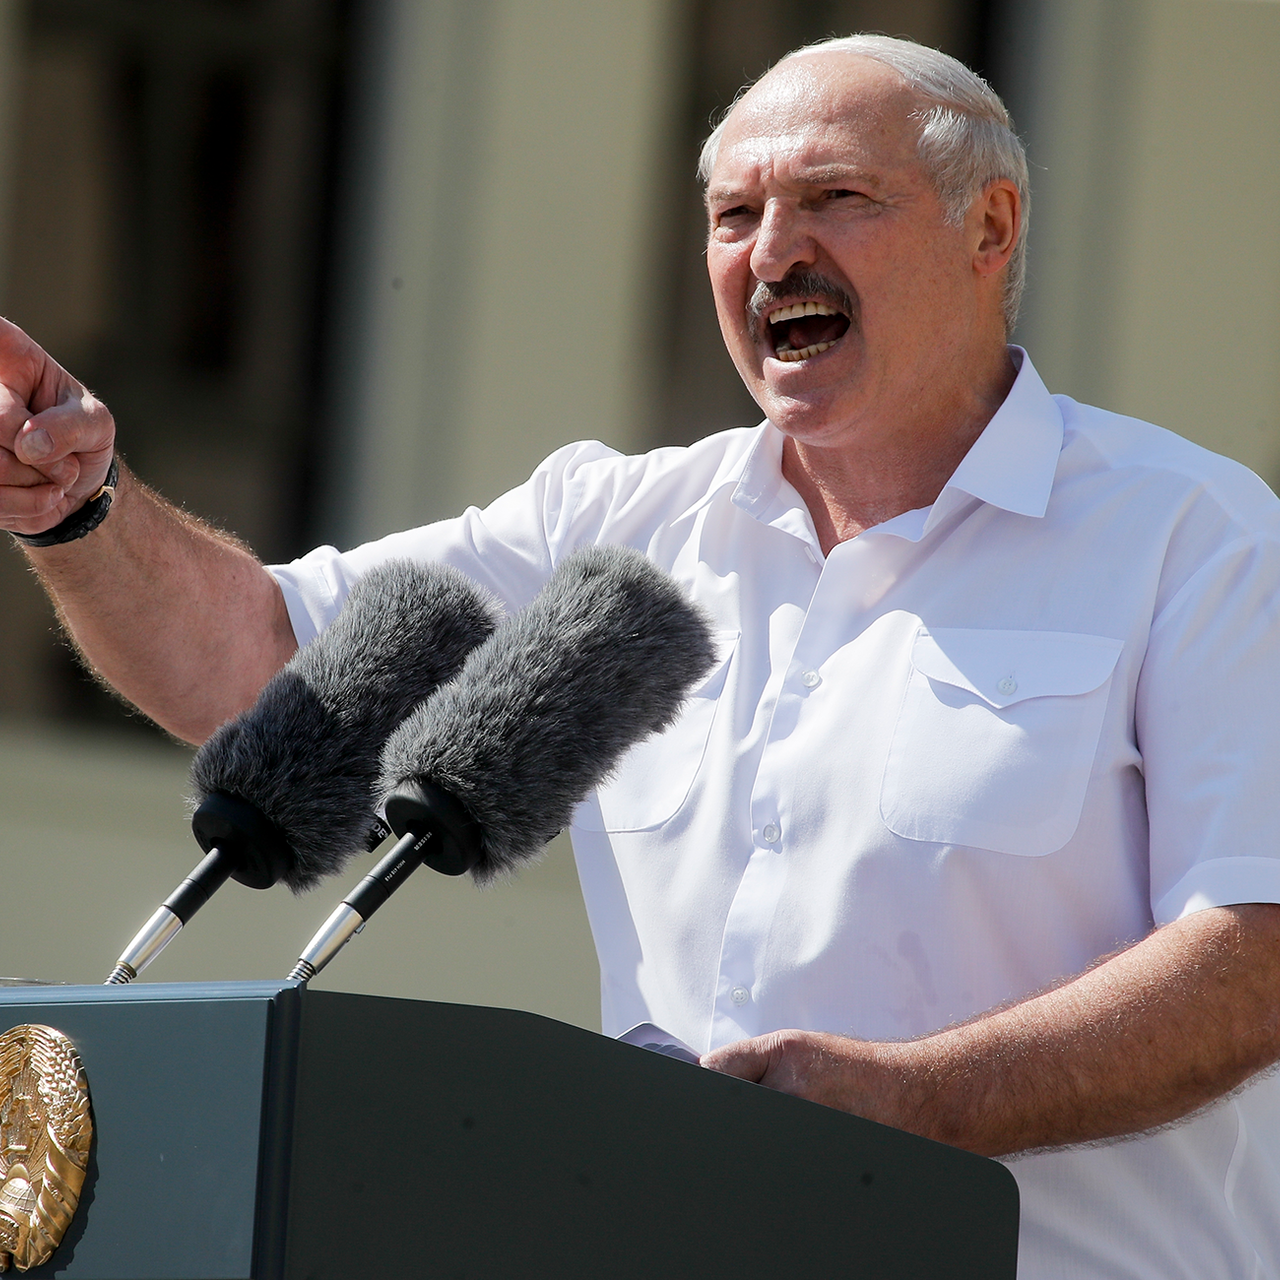 Лукашенко у власти сколько в качестве президента